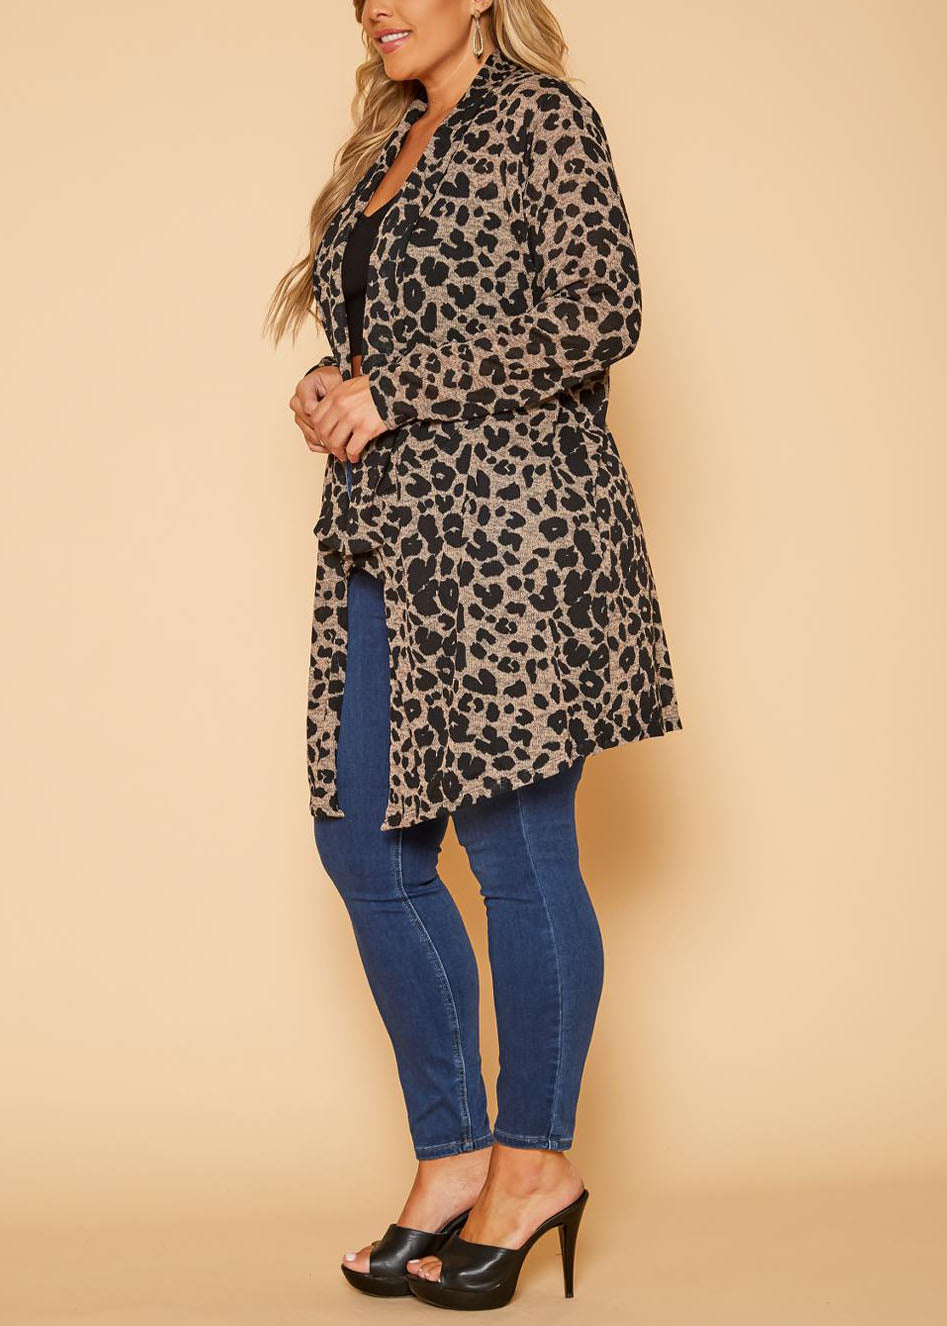 Hi Curvy Plus Size Women Leopard Print Drape Front Cardigan